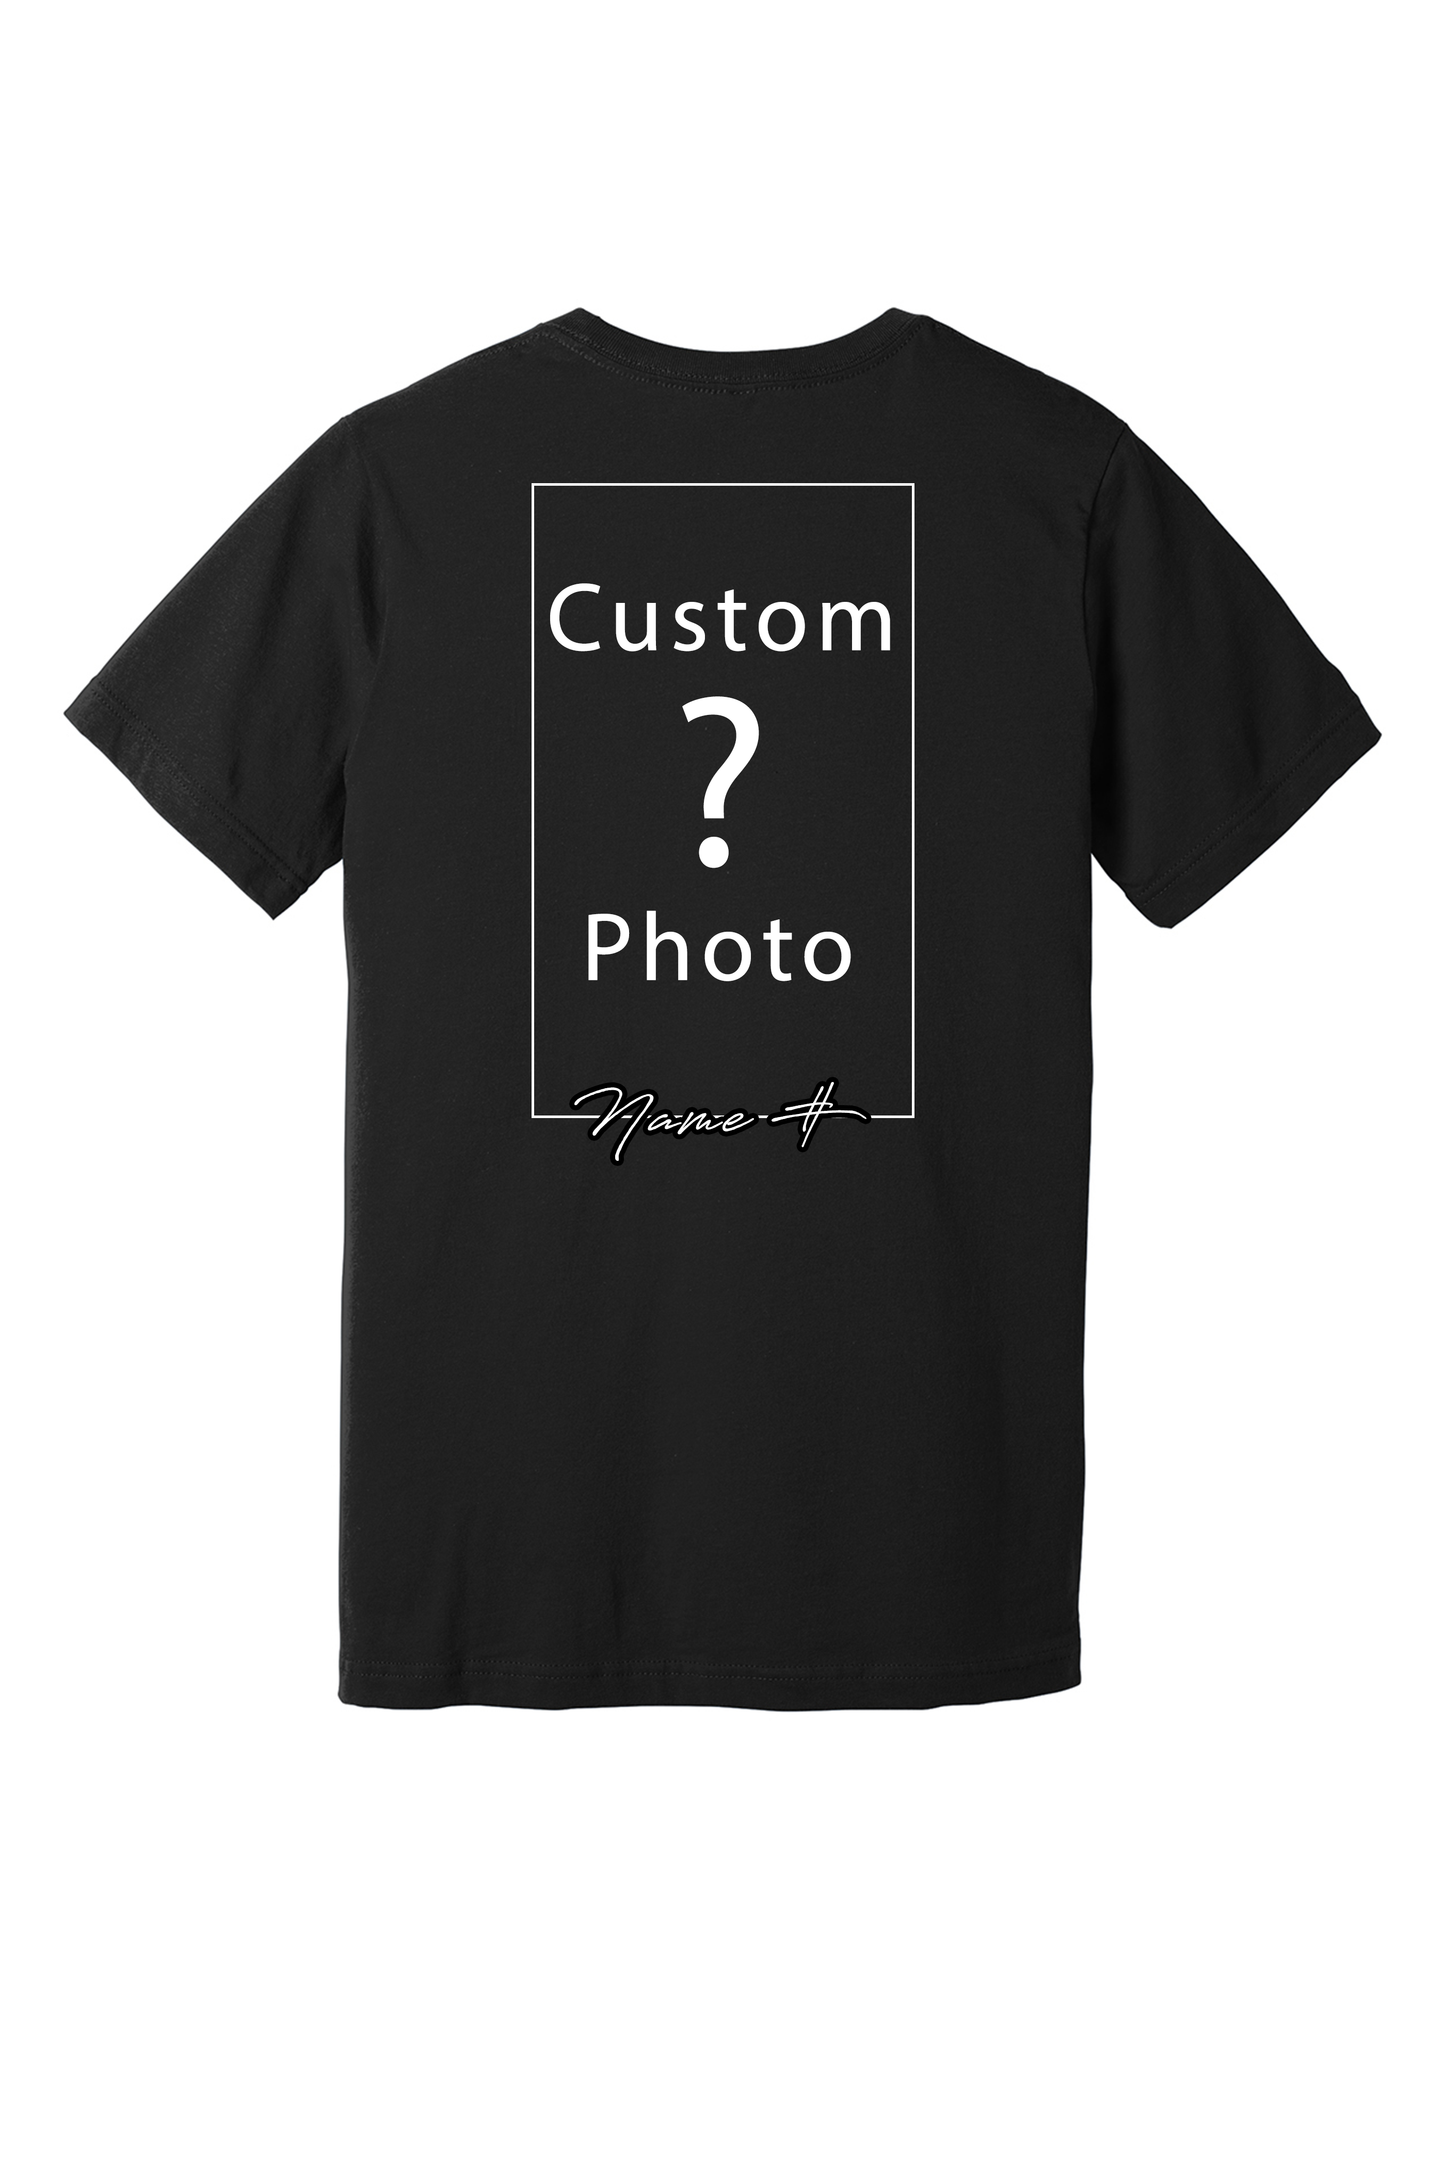 All In Media - Custom Photo T-Shirt